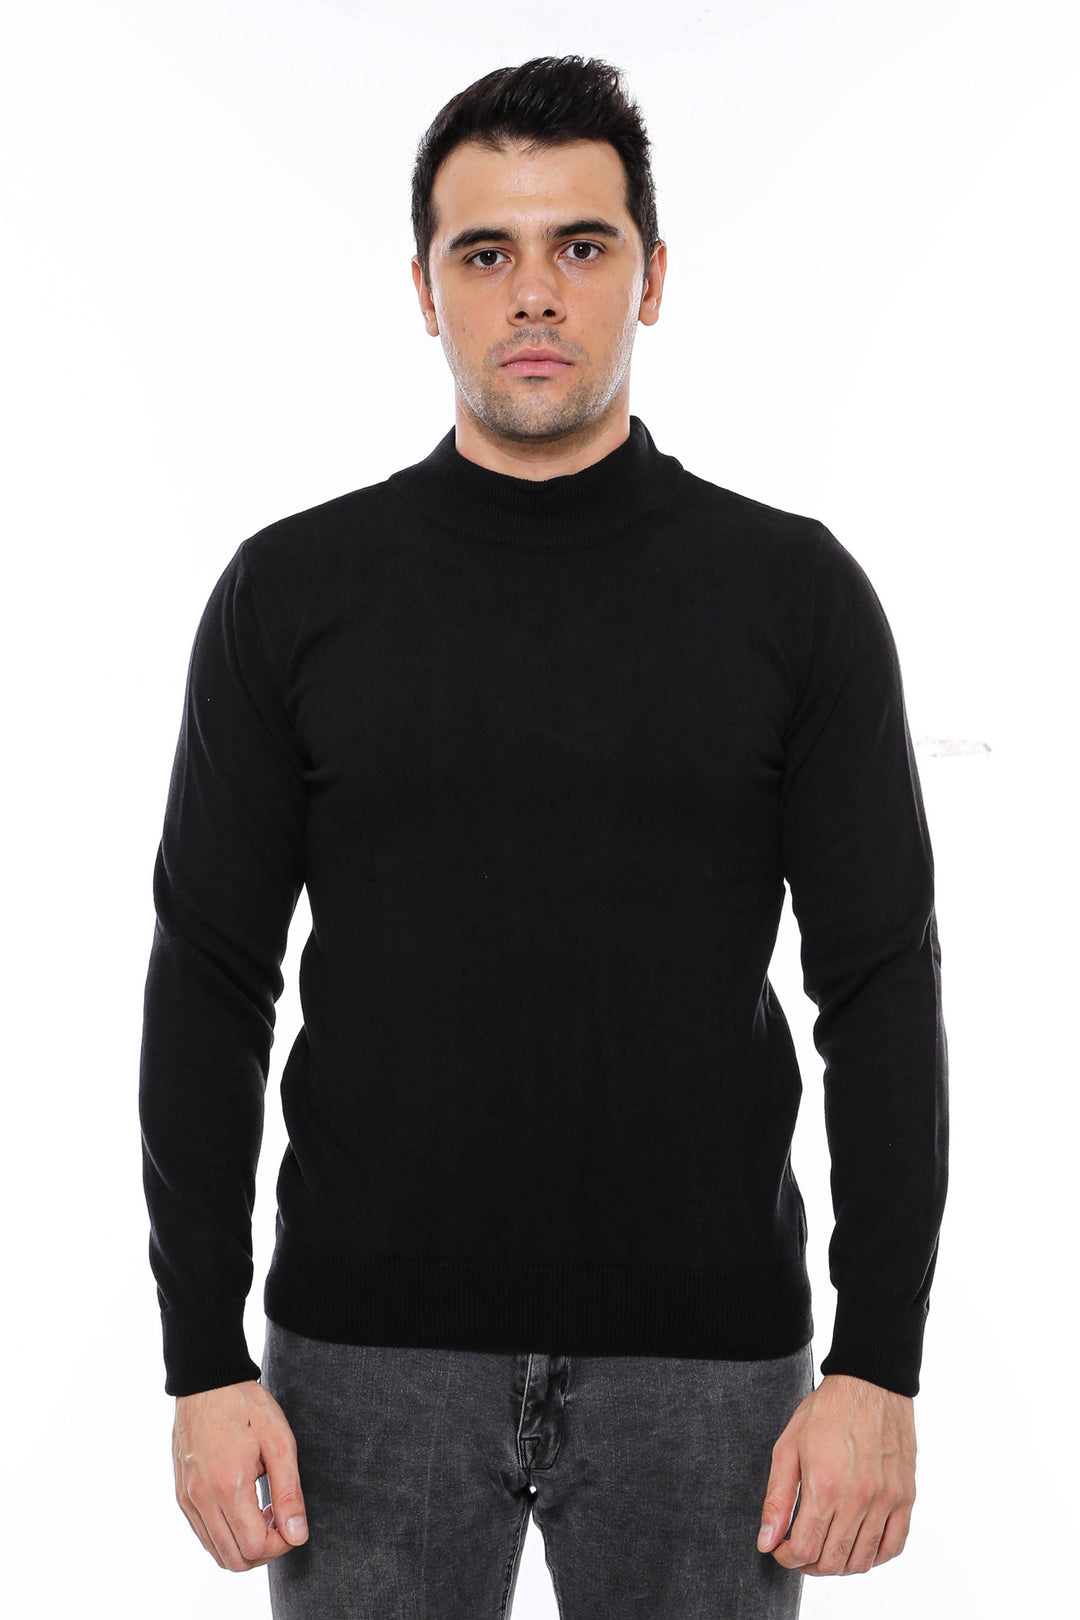 Half Turtleneck Black Knitwear Sweater - Wessi